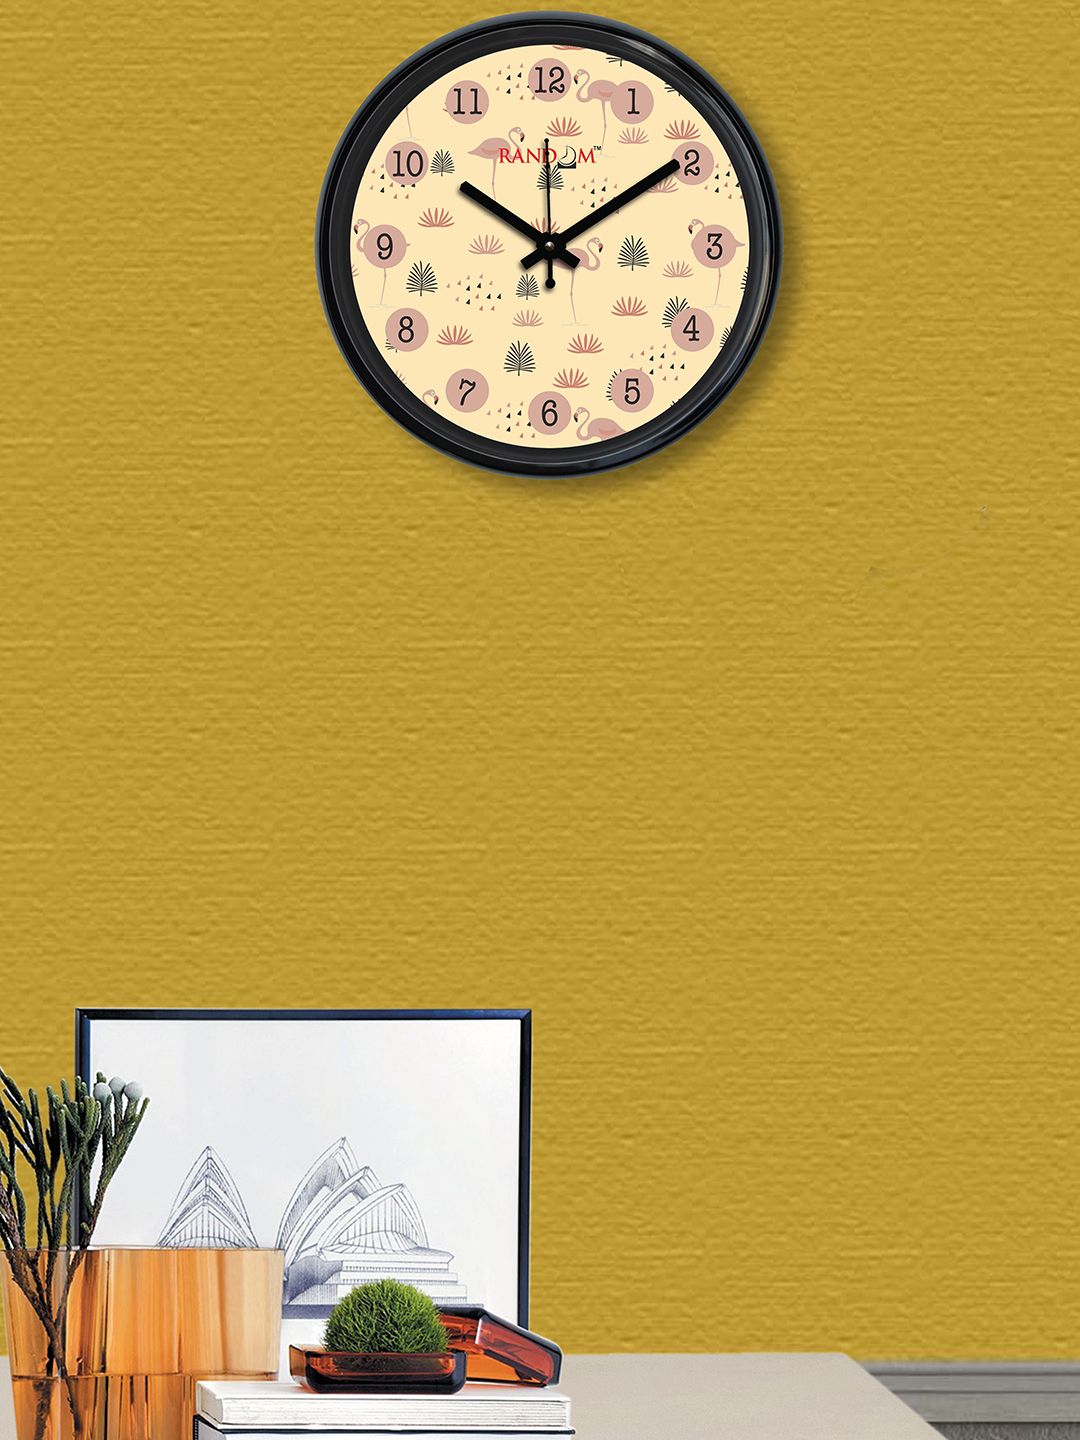 RANDOM Beige Round Printed Analogue Wall Clock 30.4 cm x 30.4 cm x 5.08 cm Price in India